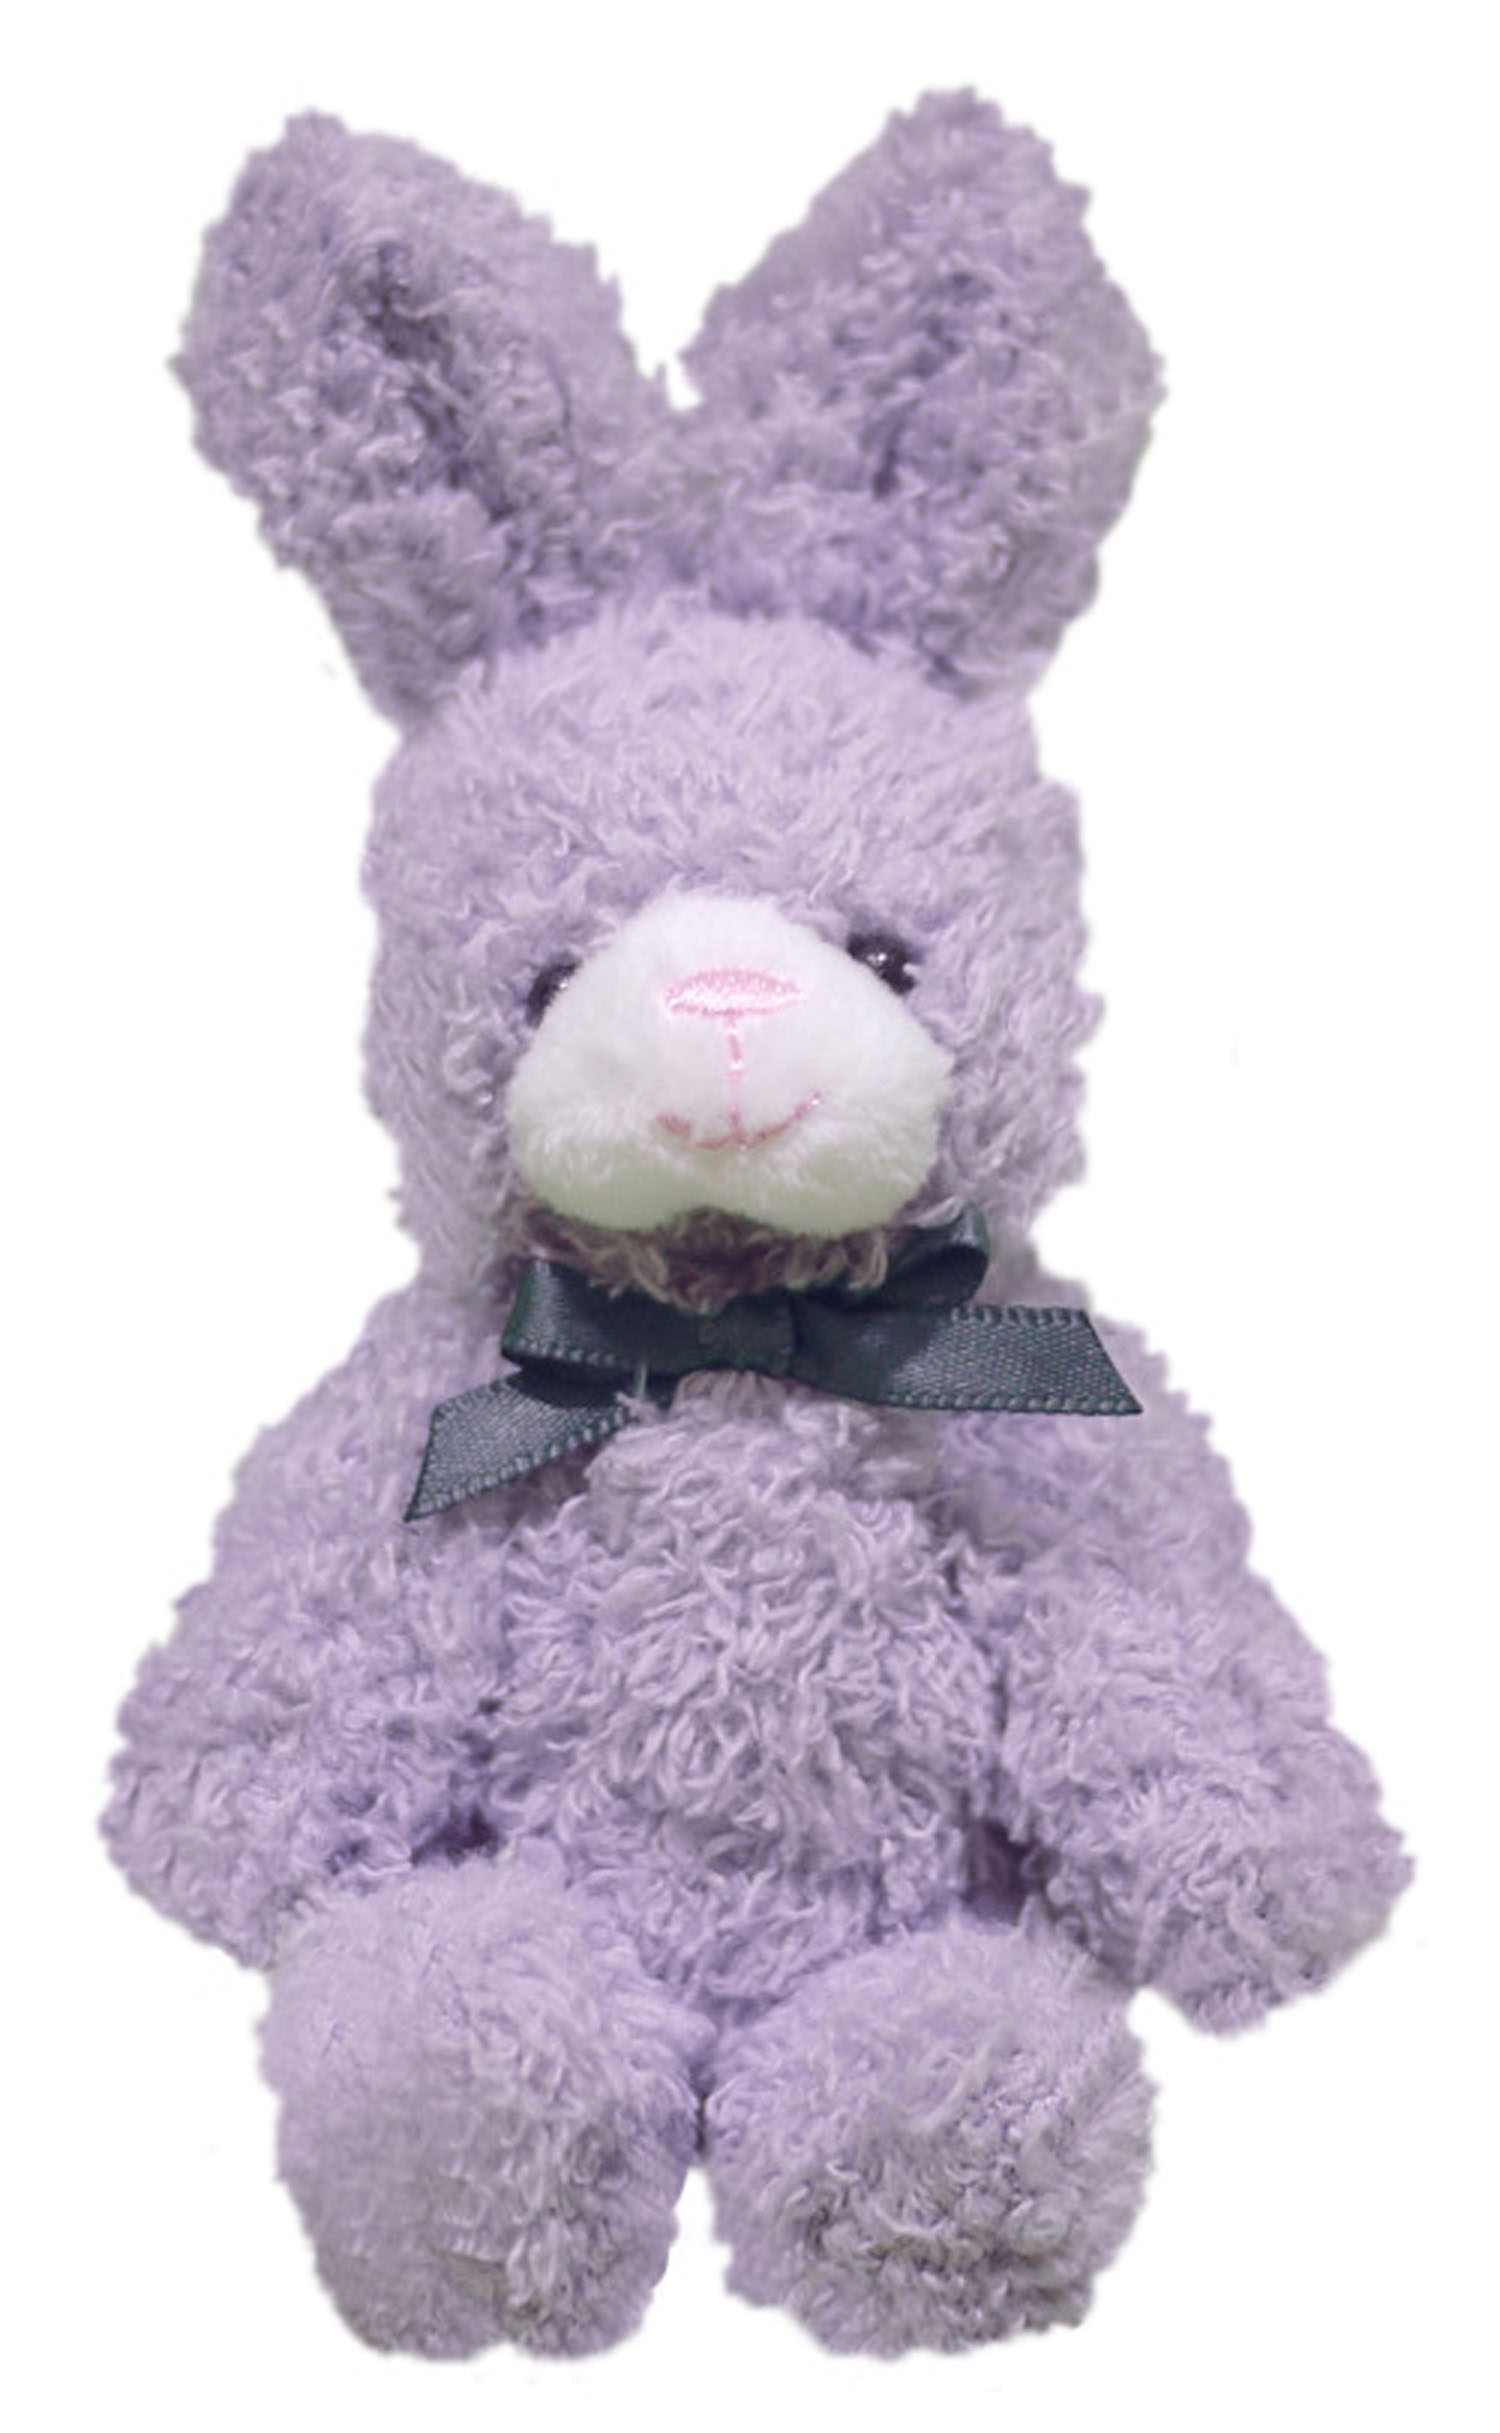 Mini mascot with ball chain, ribbon bunny, purple